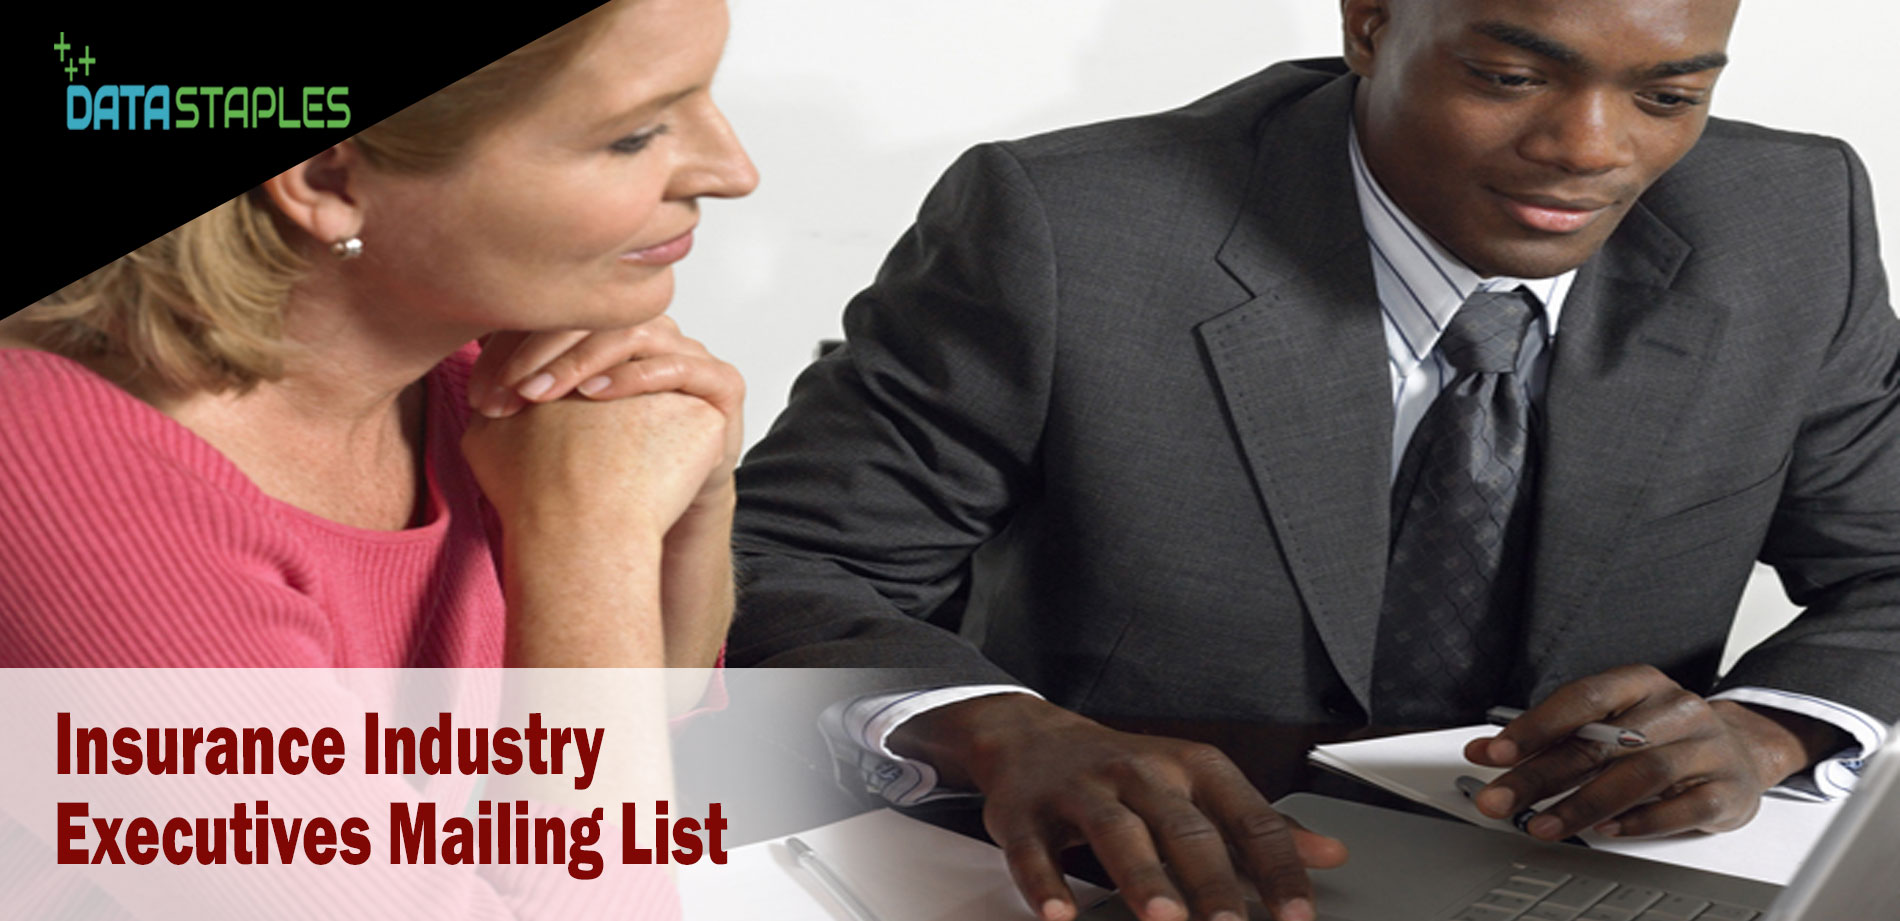 Insurance Industry Executives Mailing List | DataStaples